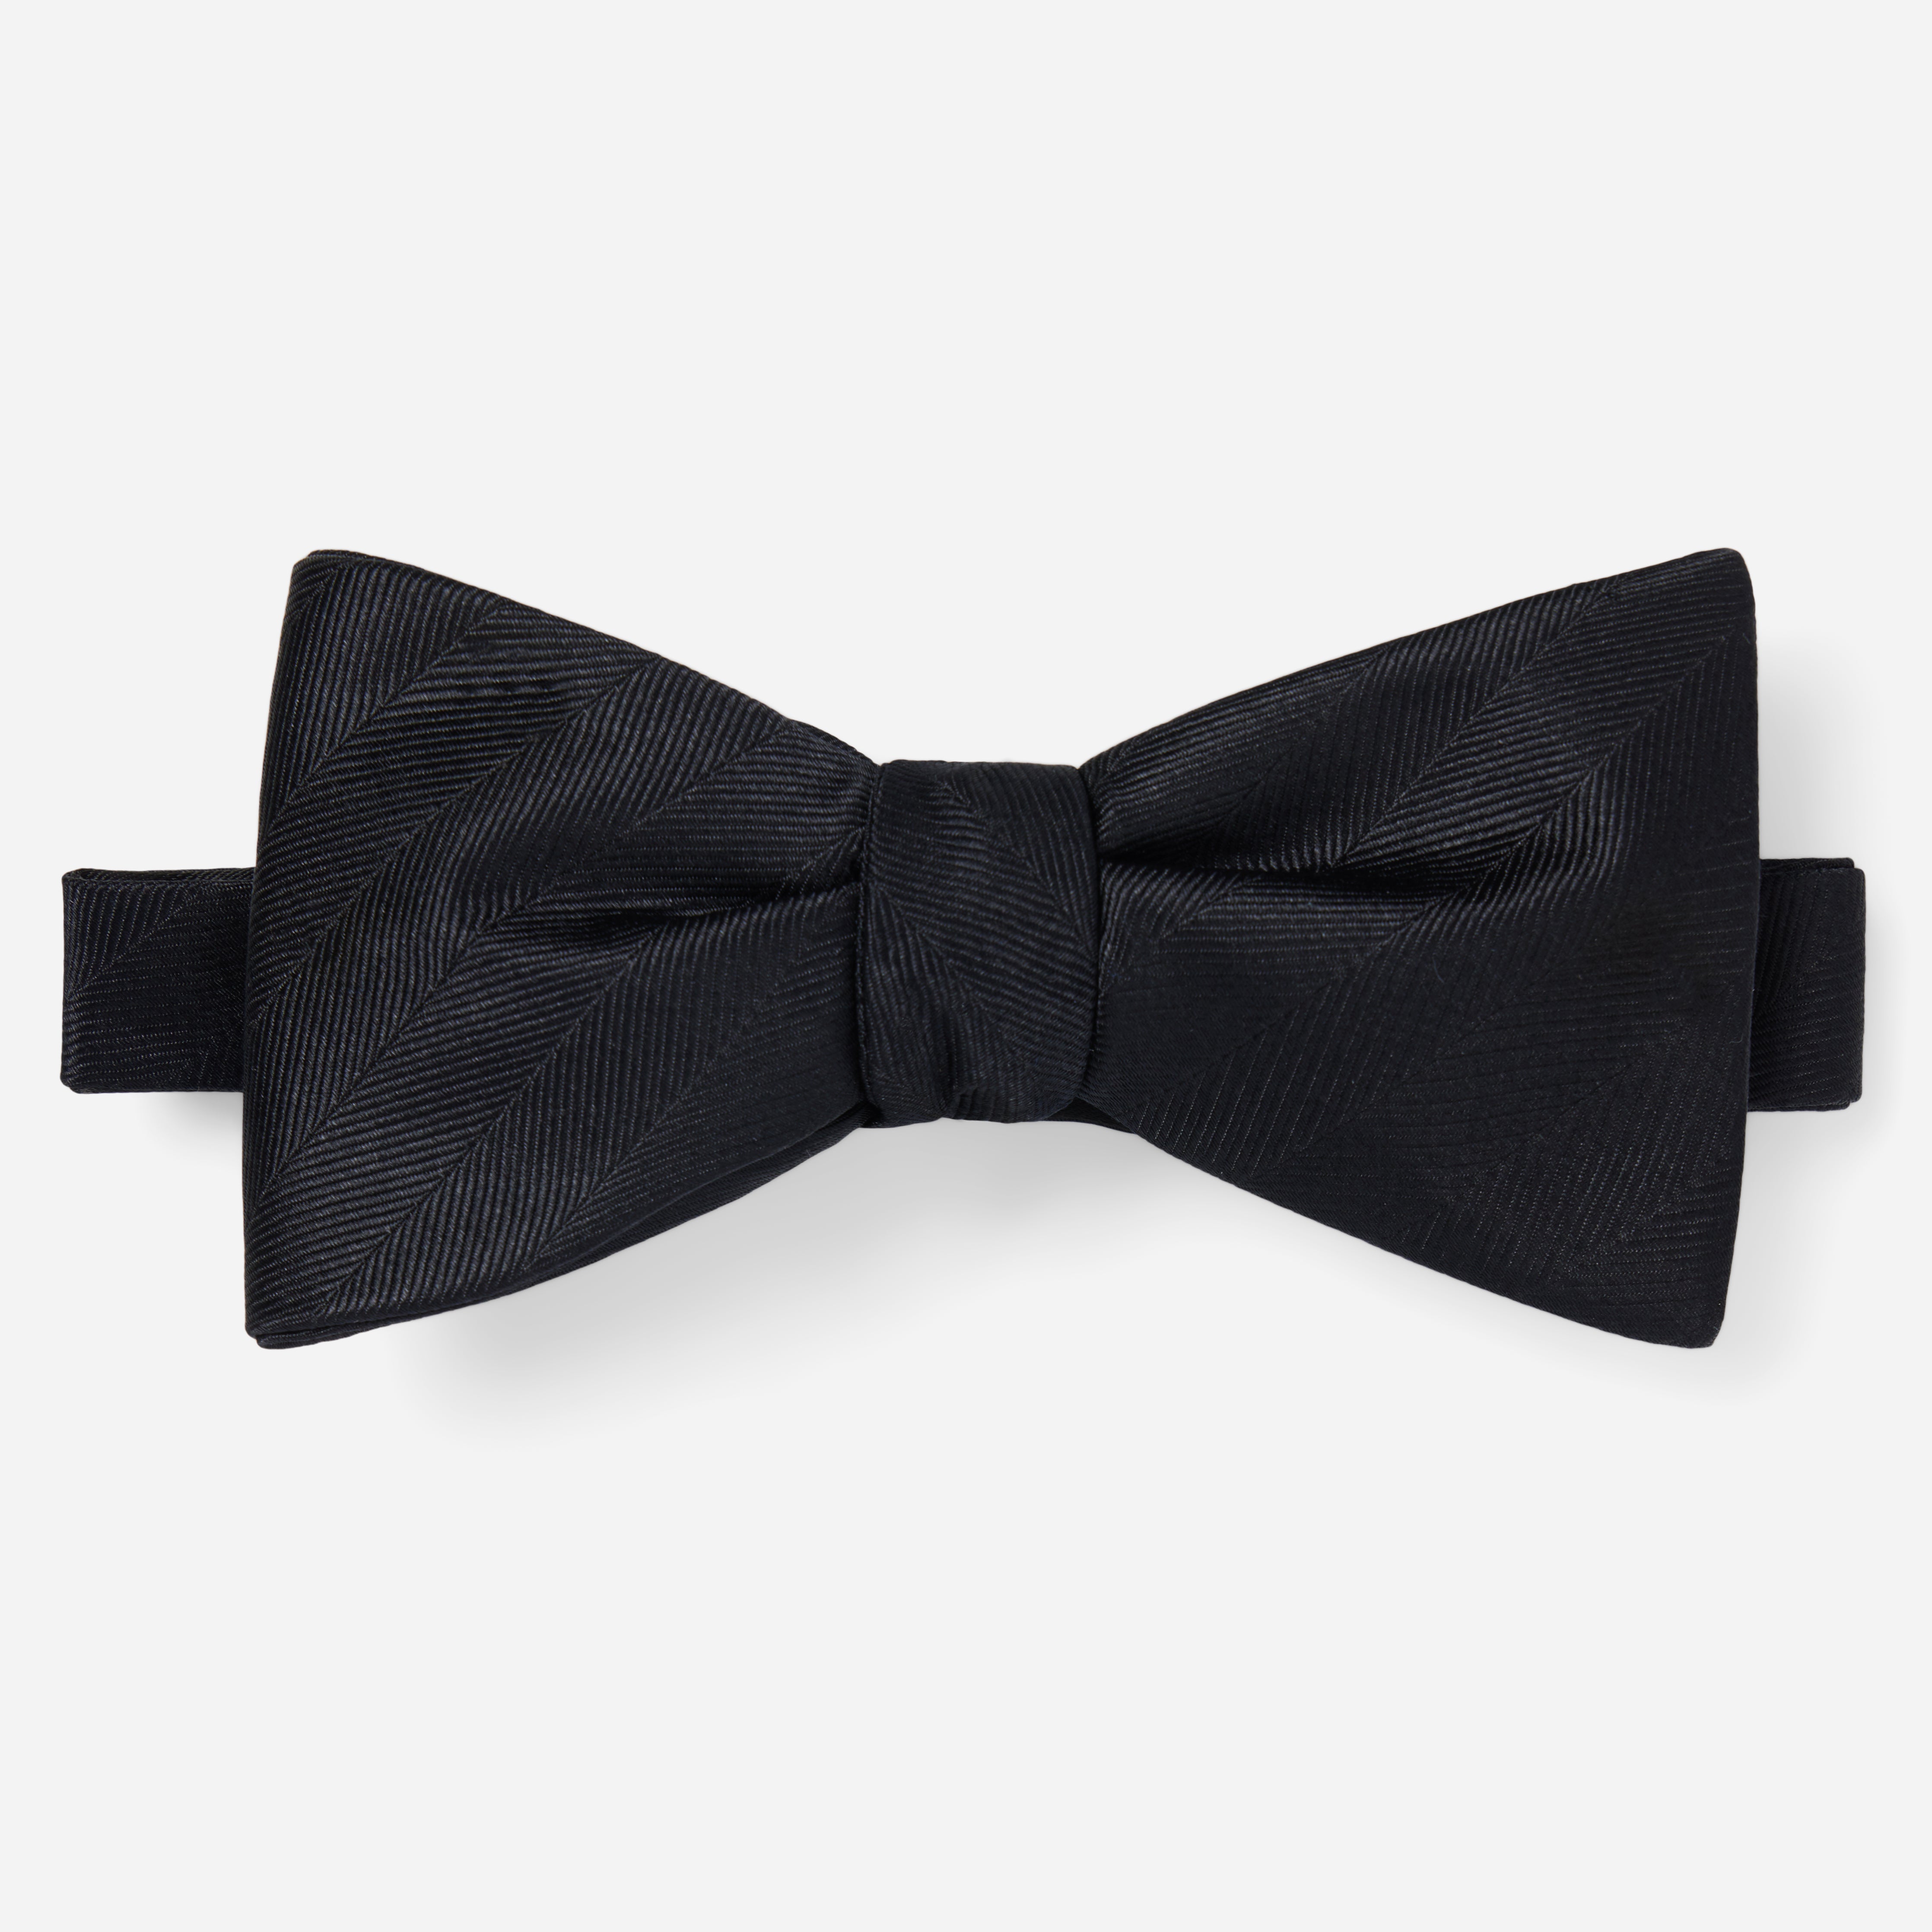 Silk crêpe bow tie in black